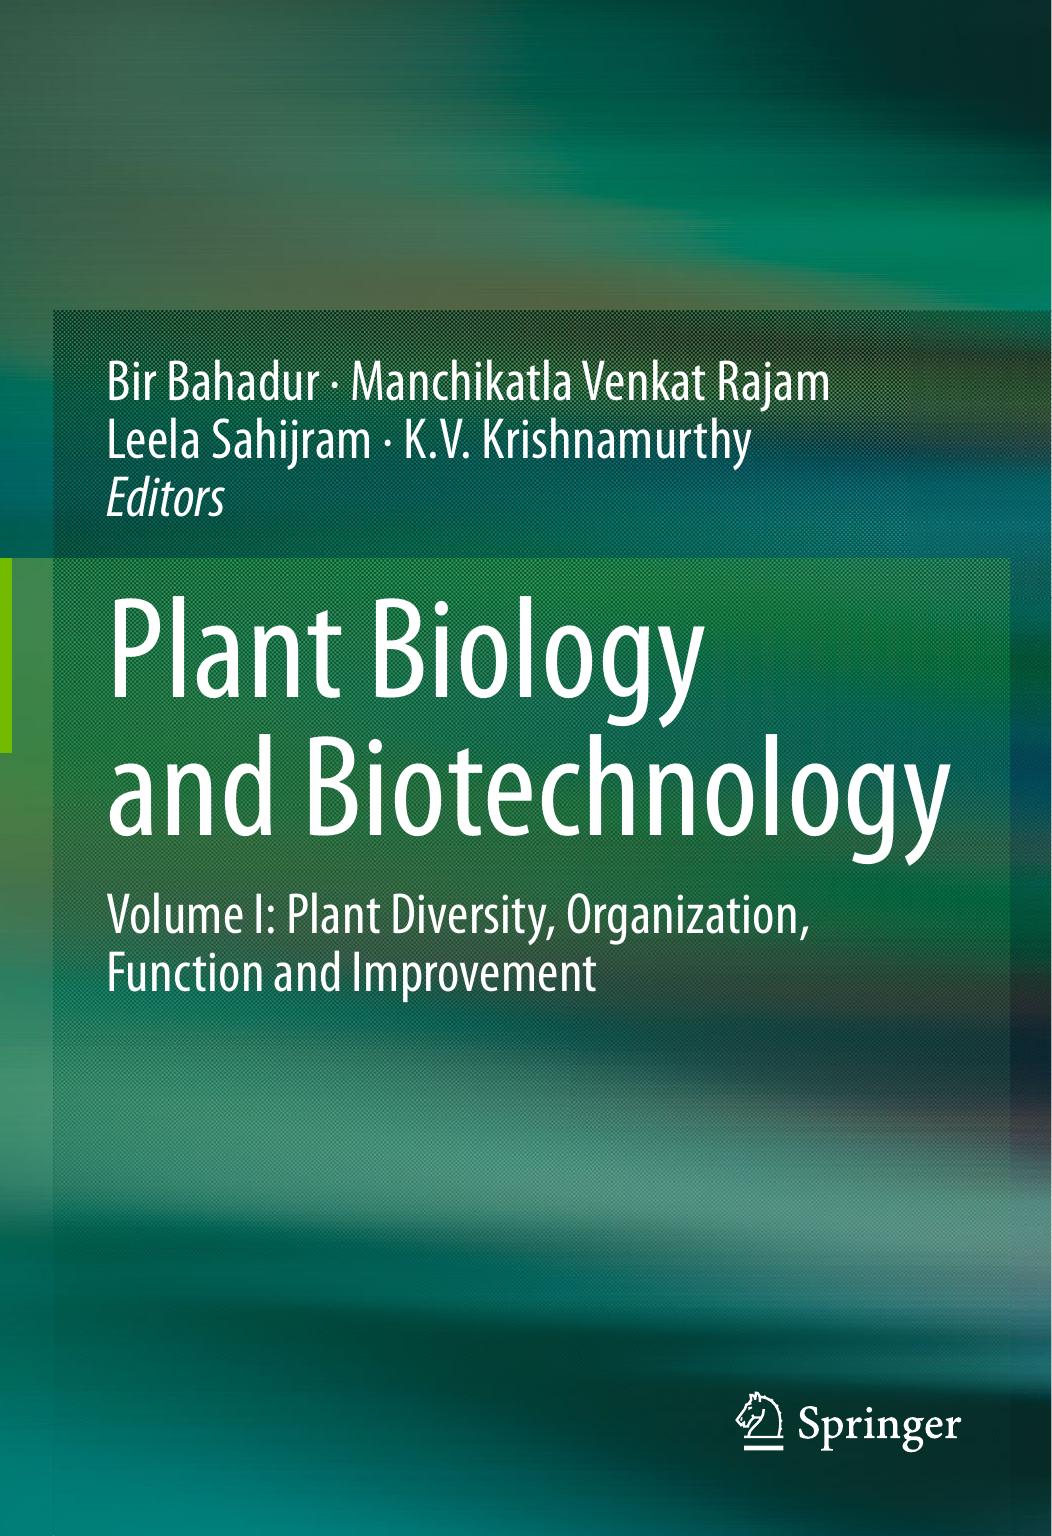 Plant Biology and Biotechnology Volume I Plant Diversity, Organization, 2015 ( PDFDrive.com )